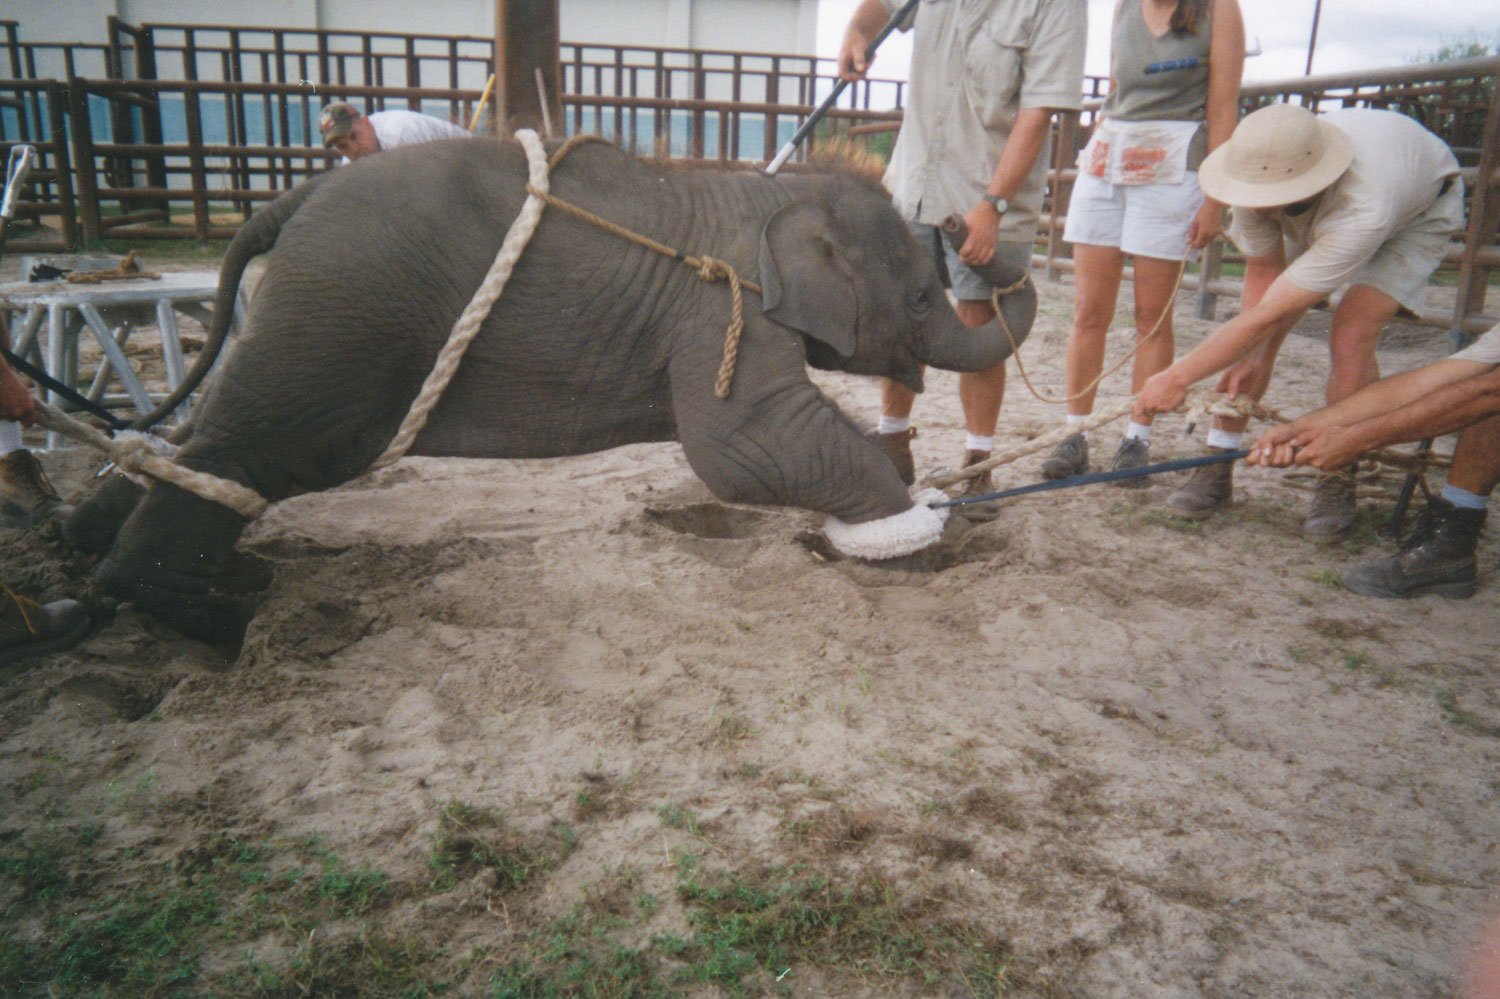 How are Elephants Trained